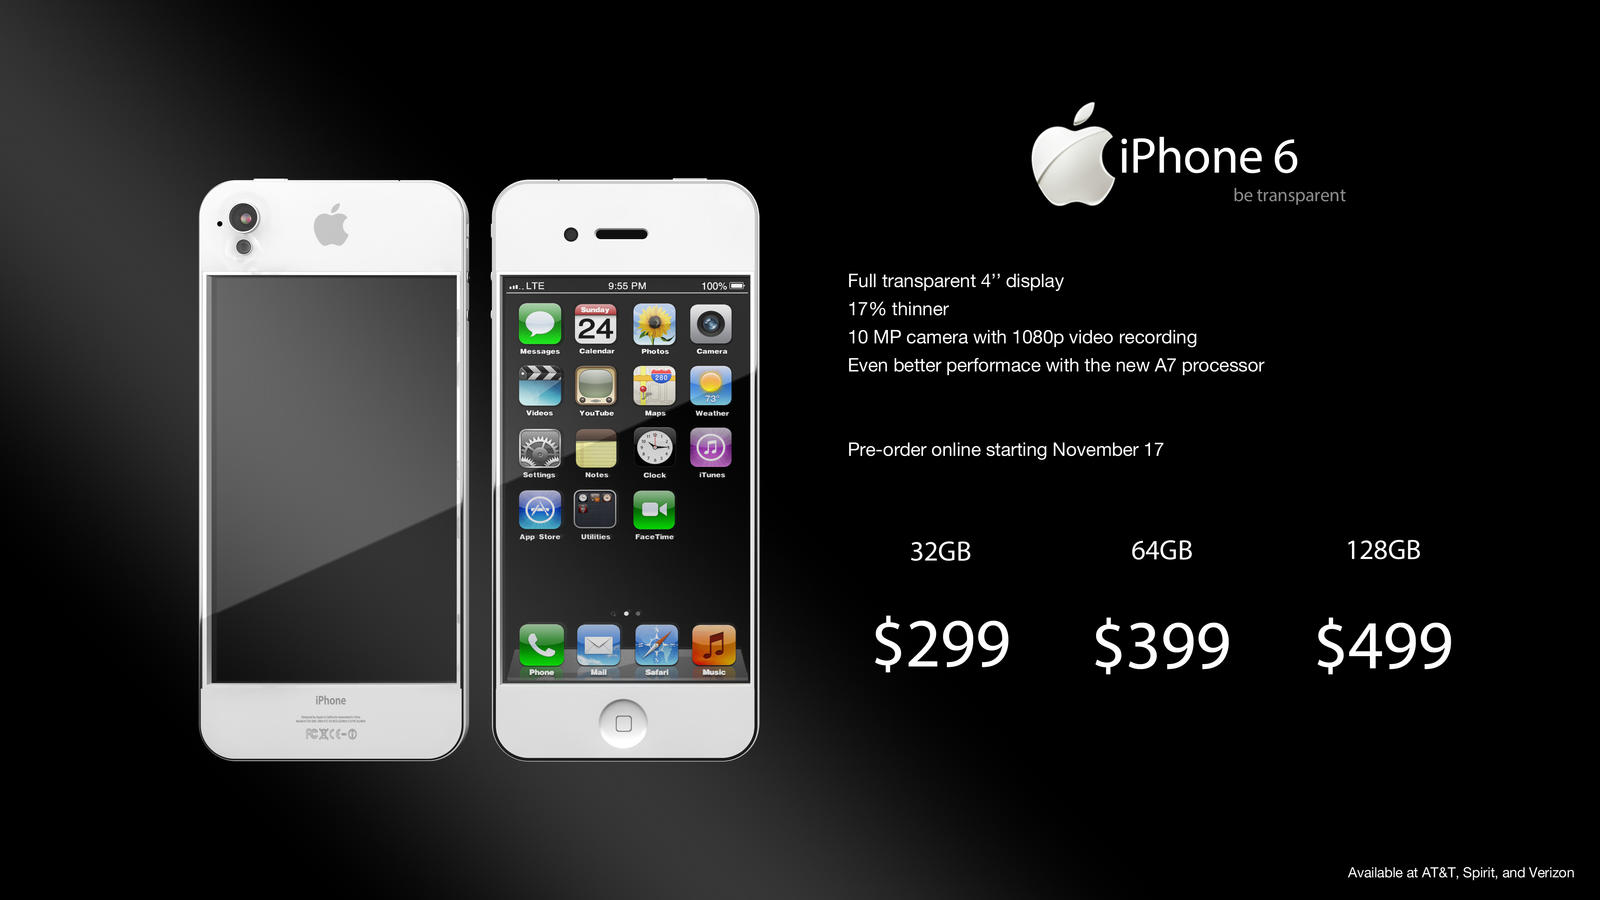 iphone 6 white advertisement by xerix93 on deviantart